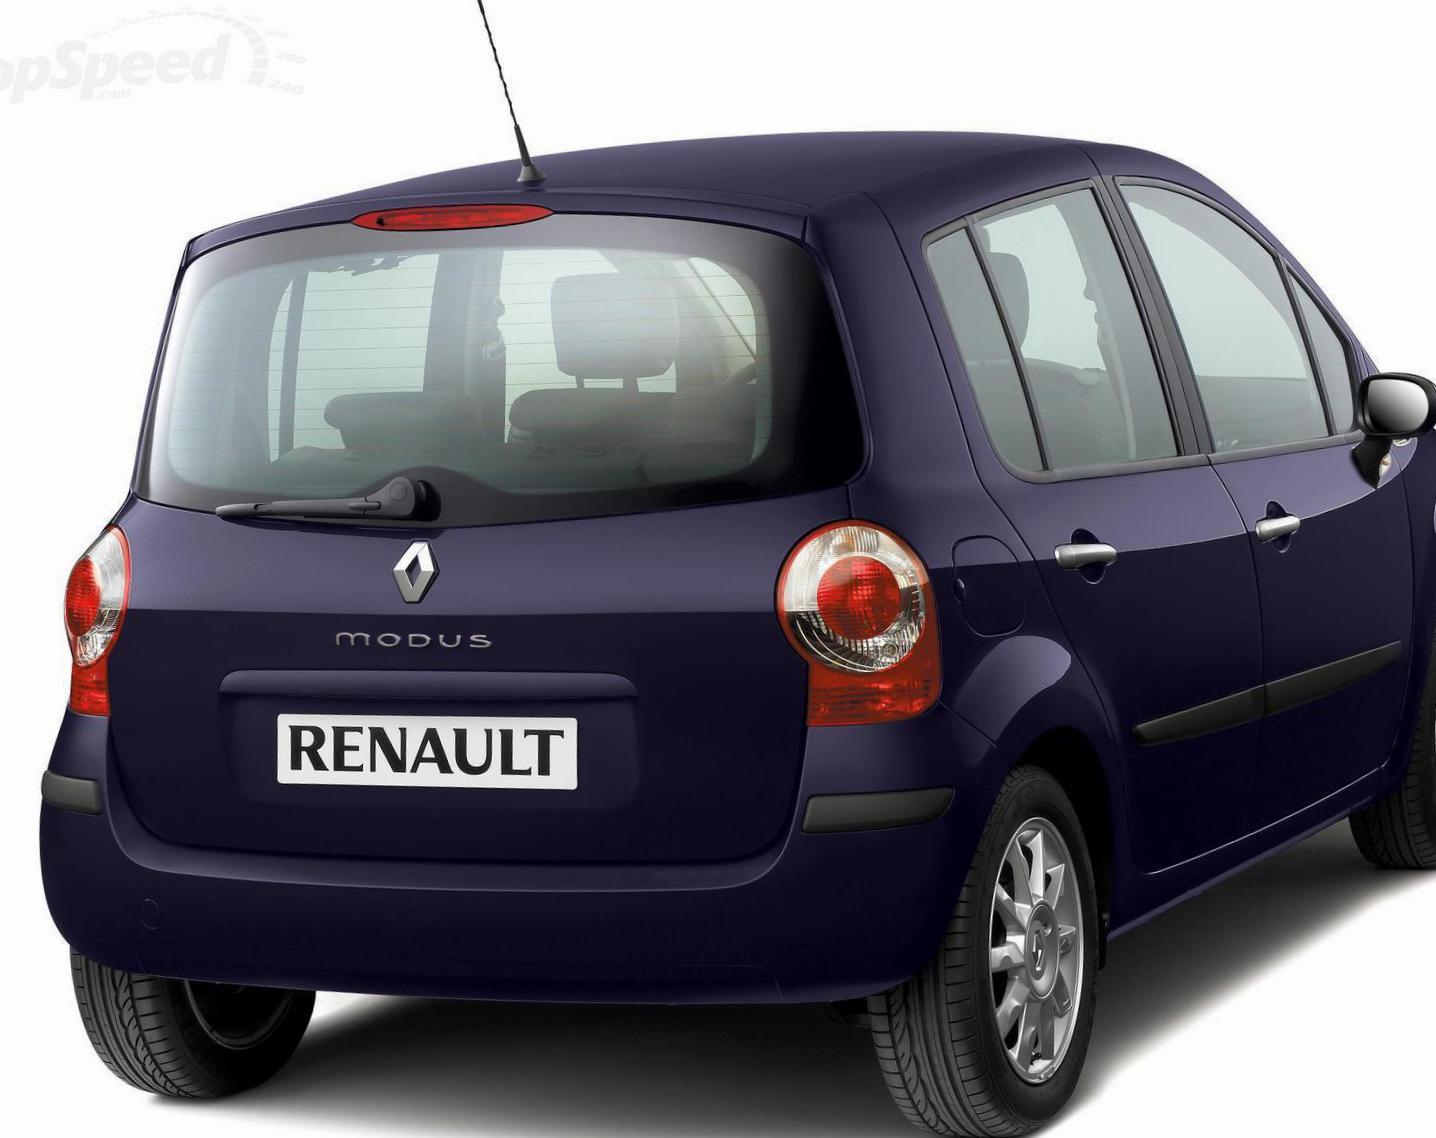 Modus Renault auto 2013